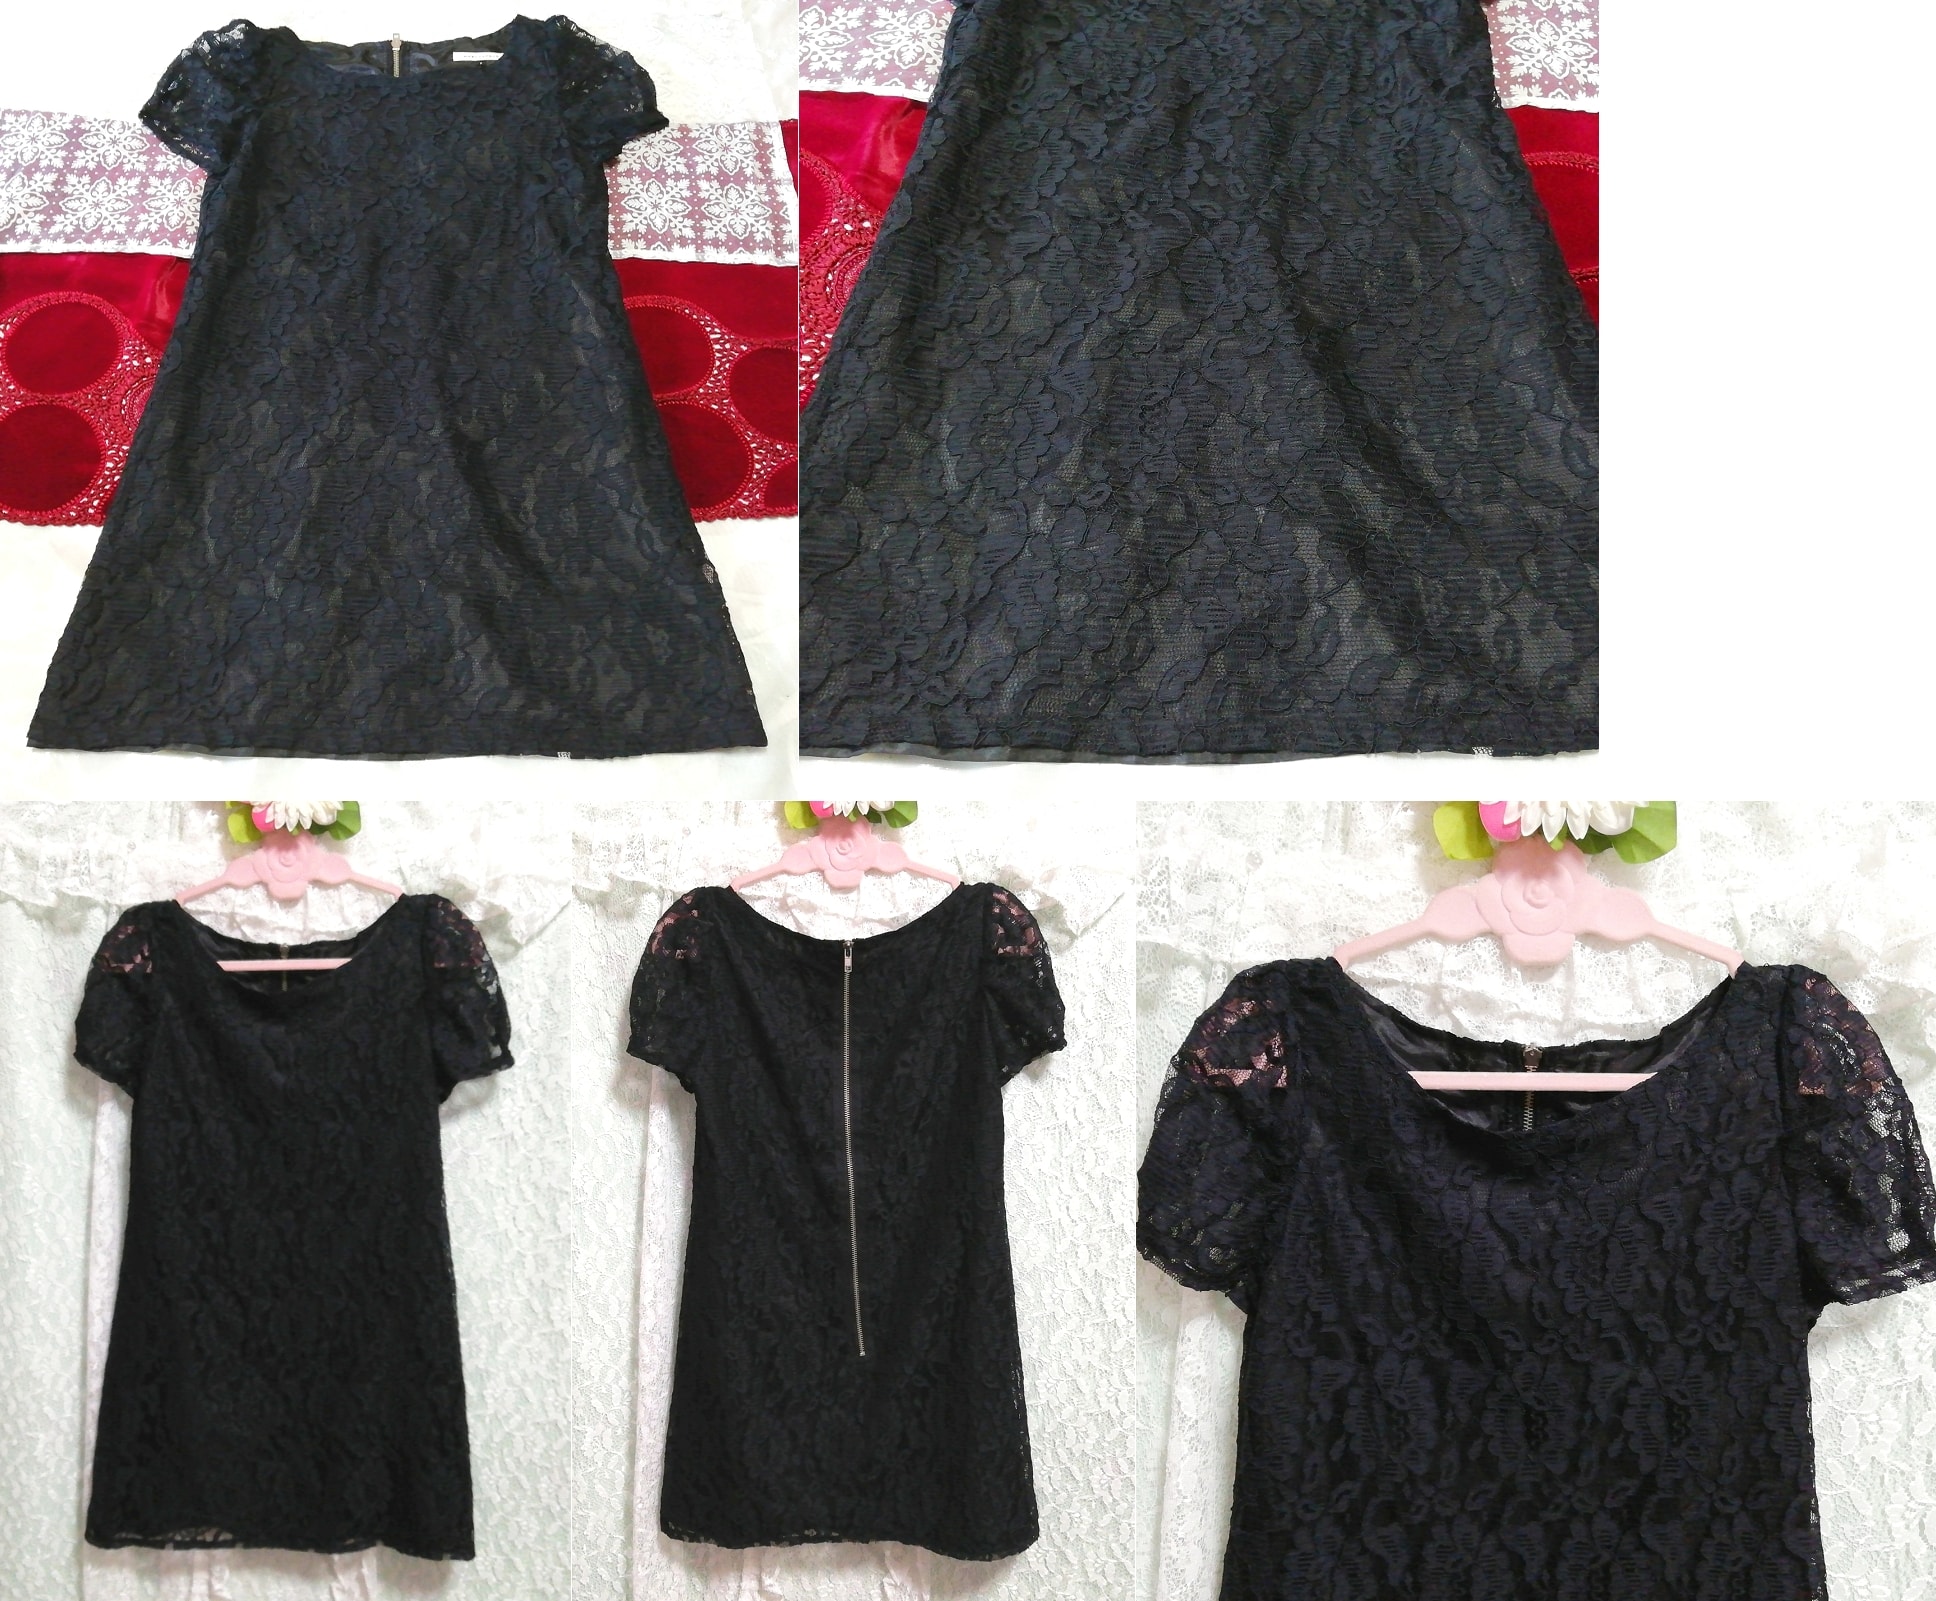 Black lace short sleeve tunic negligee nightgown nightwear dress, tunic, short sleeve, m size